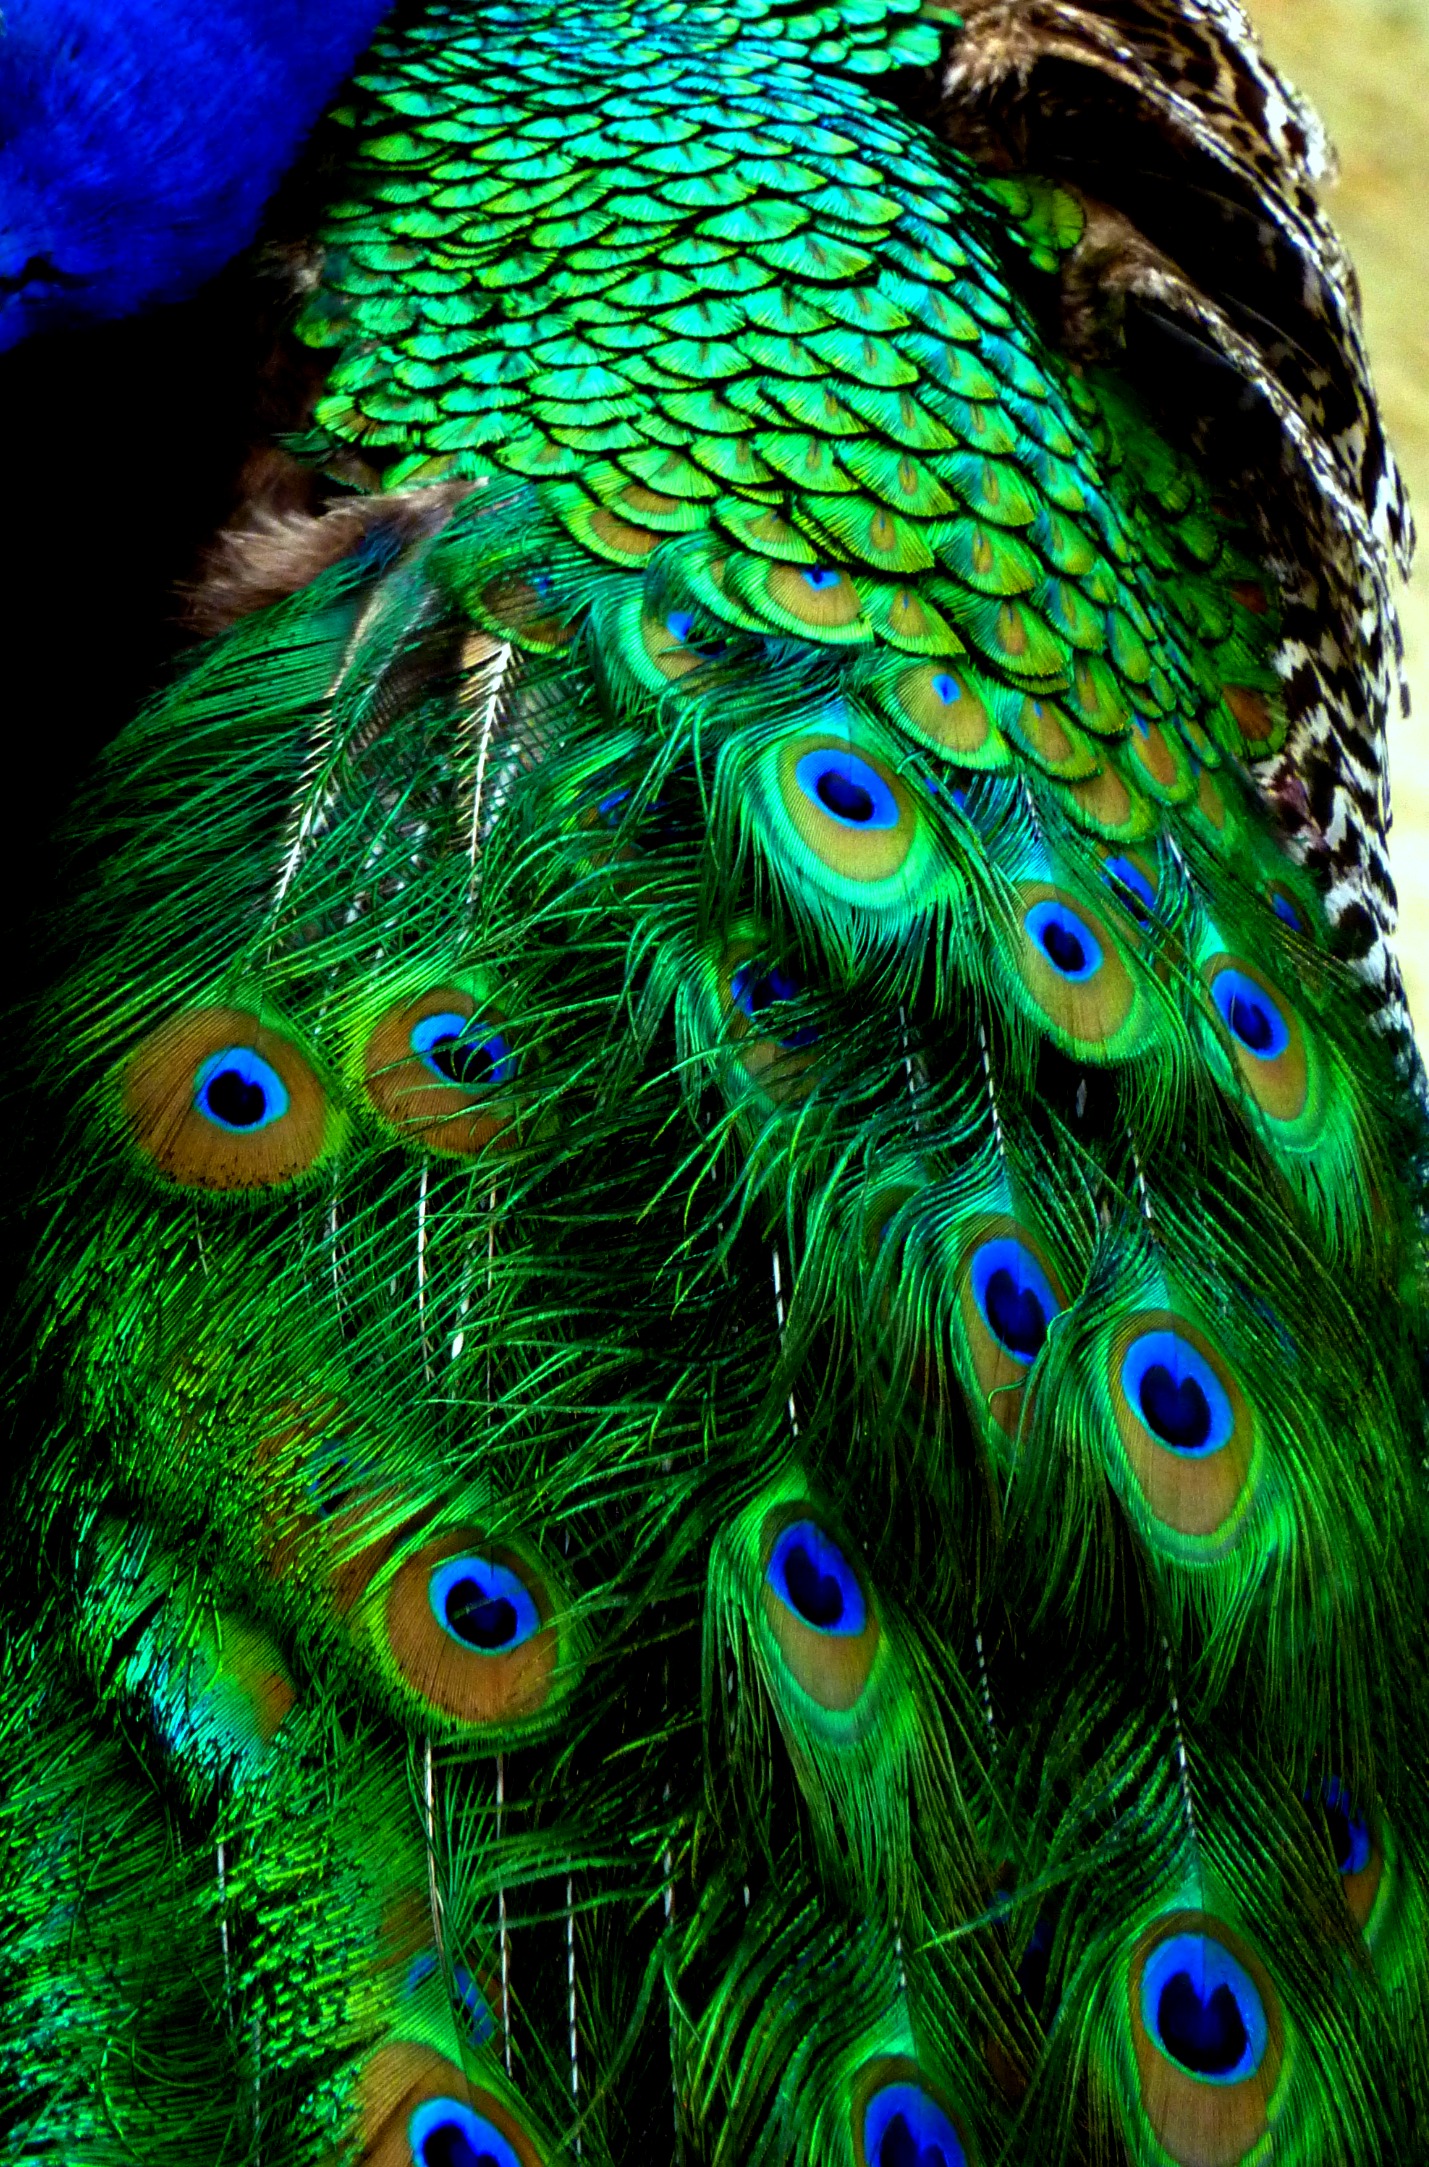 Peacock Feathers | High-Quality Stock Photos ~ Creative Market